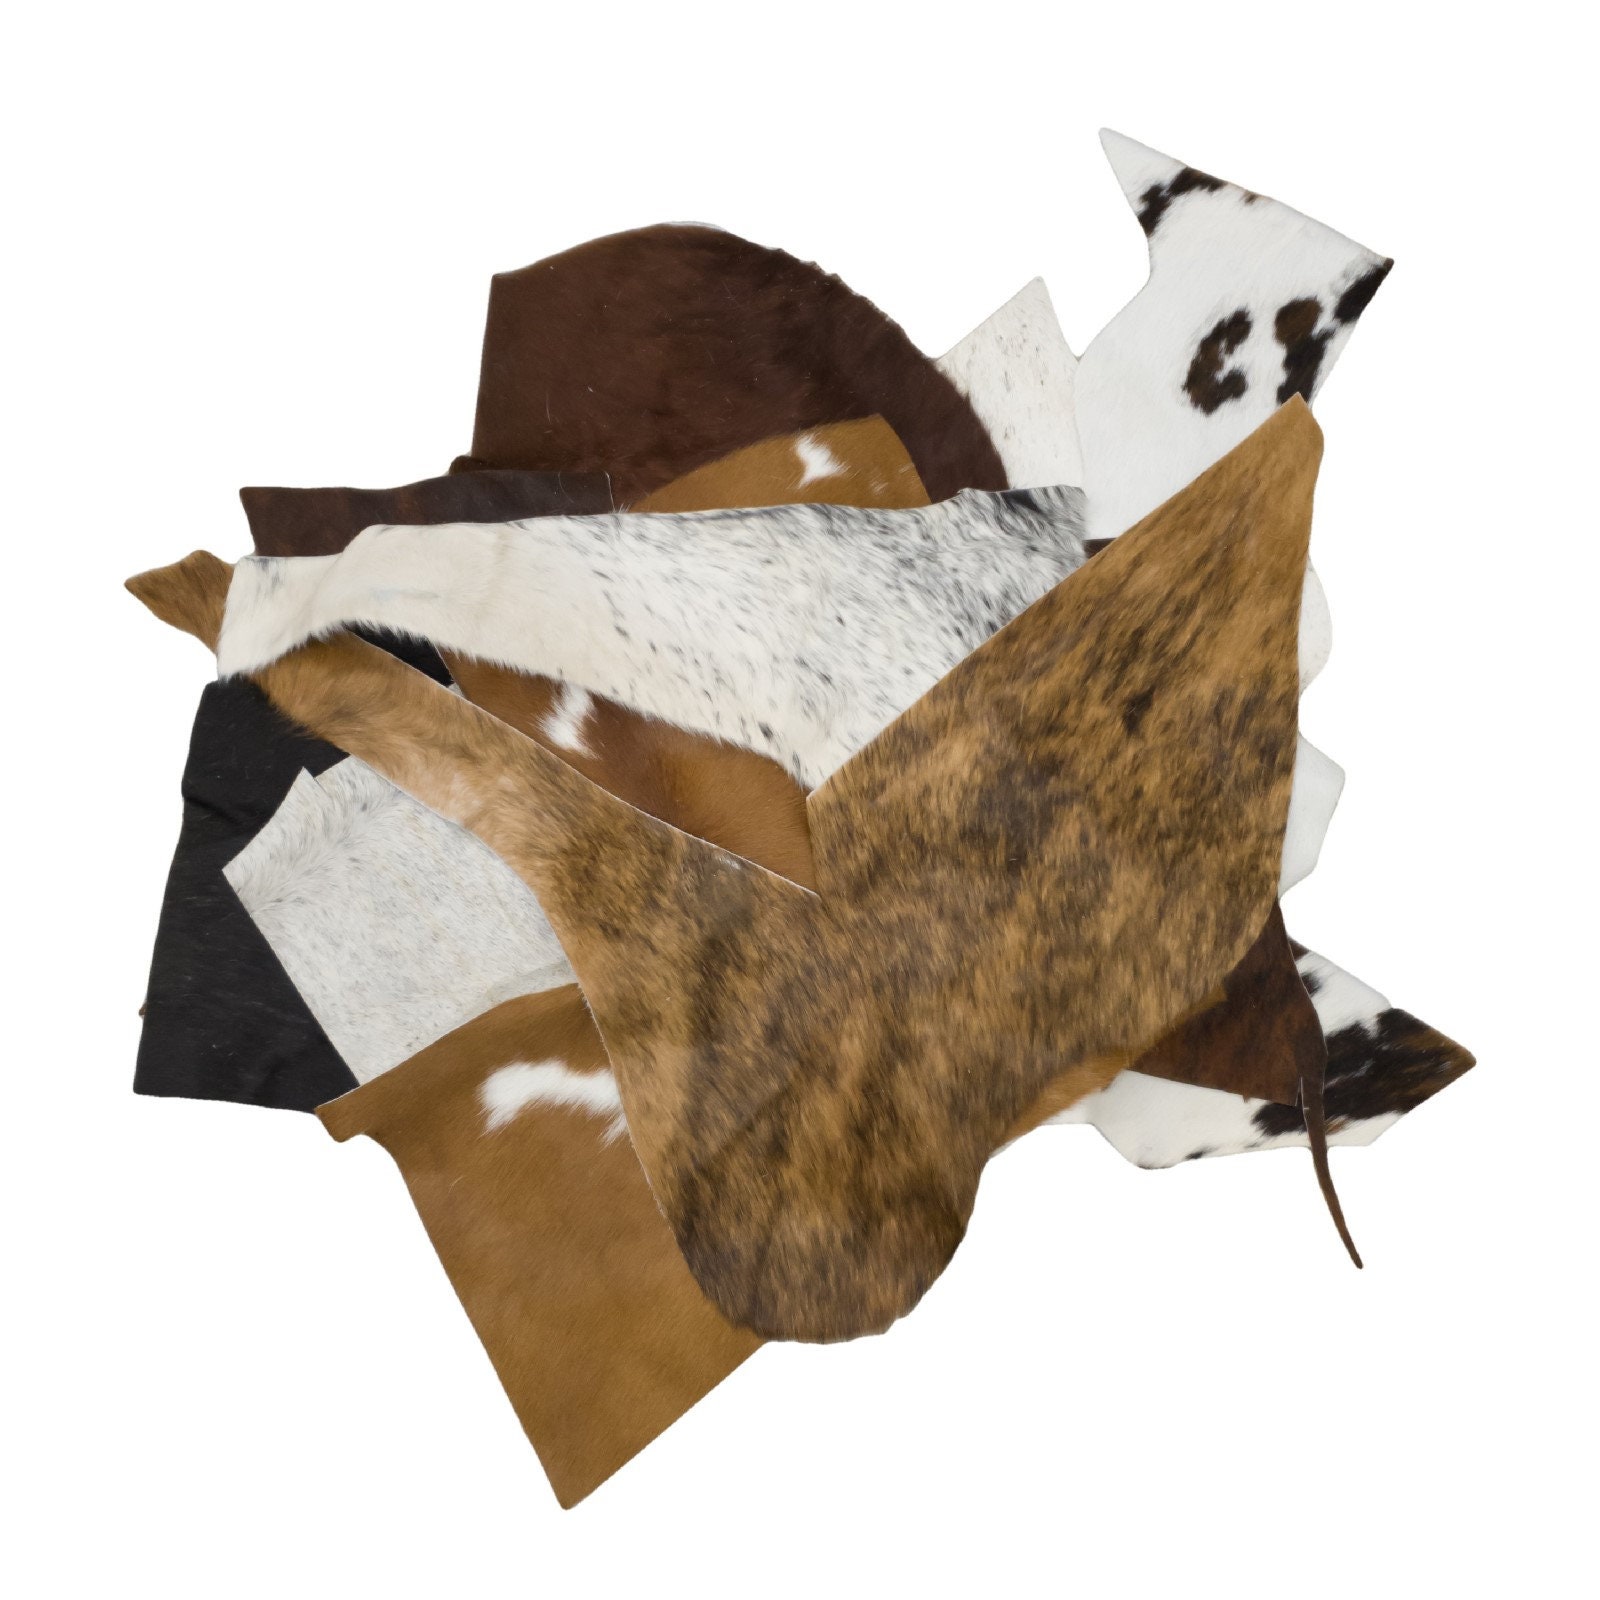 Premium Brown Leather Scraps and Remnants rustic Brown & More Colors 